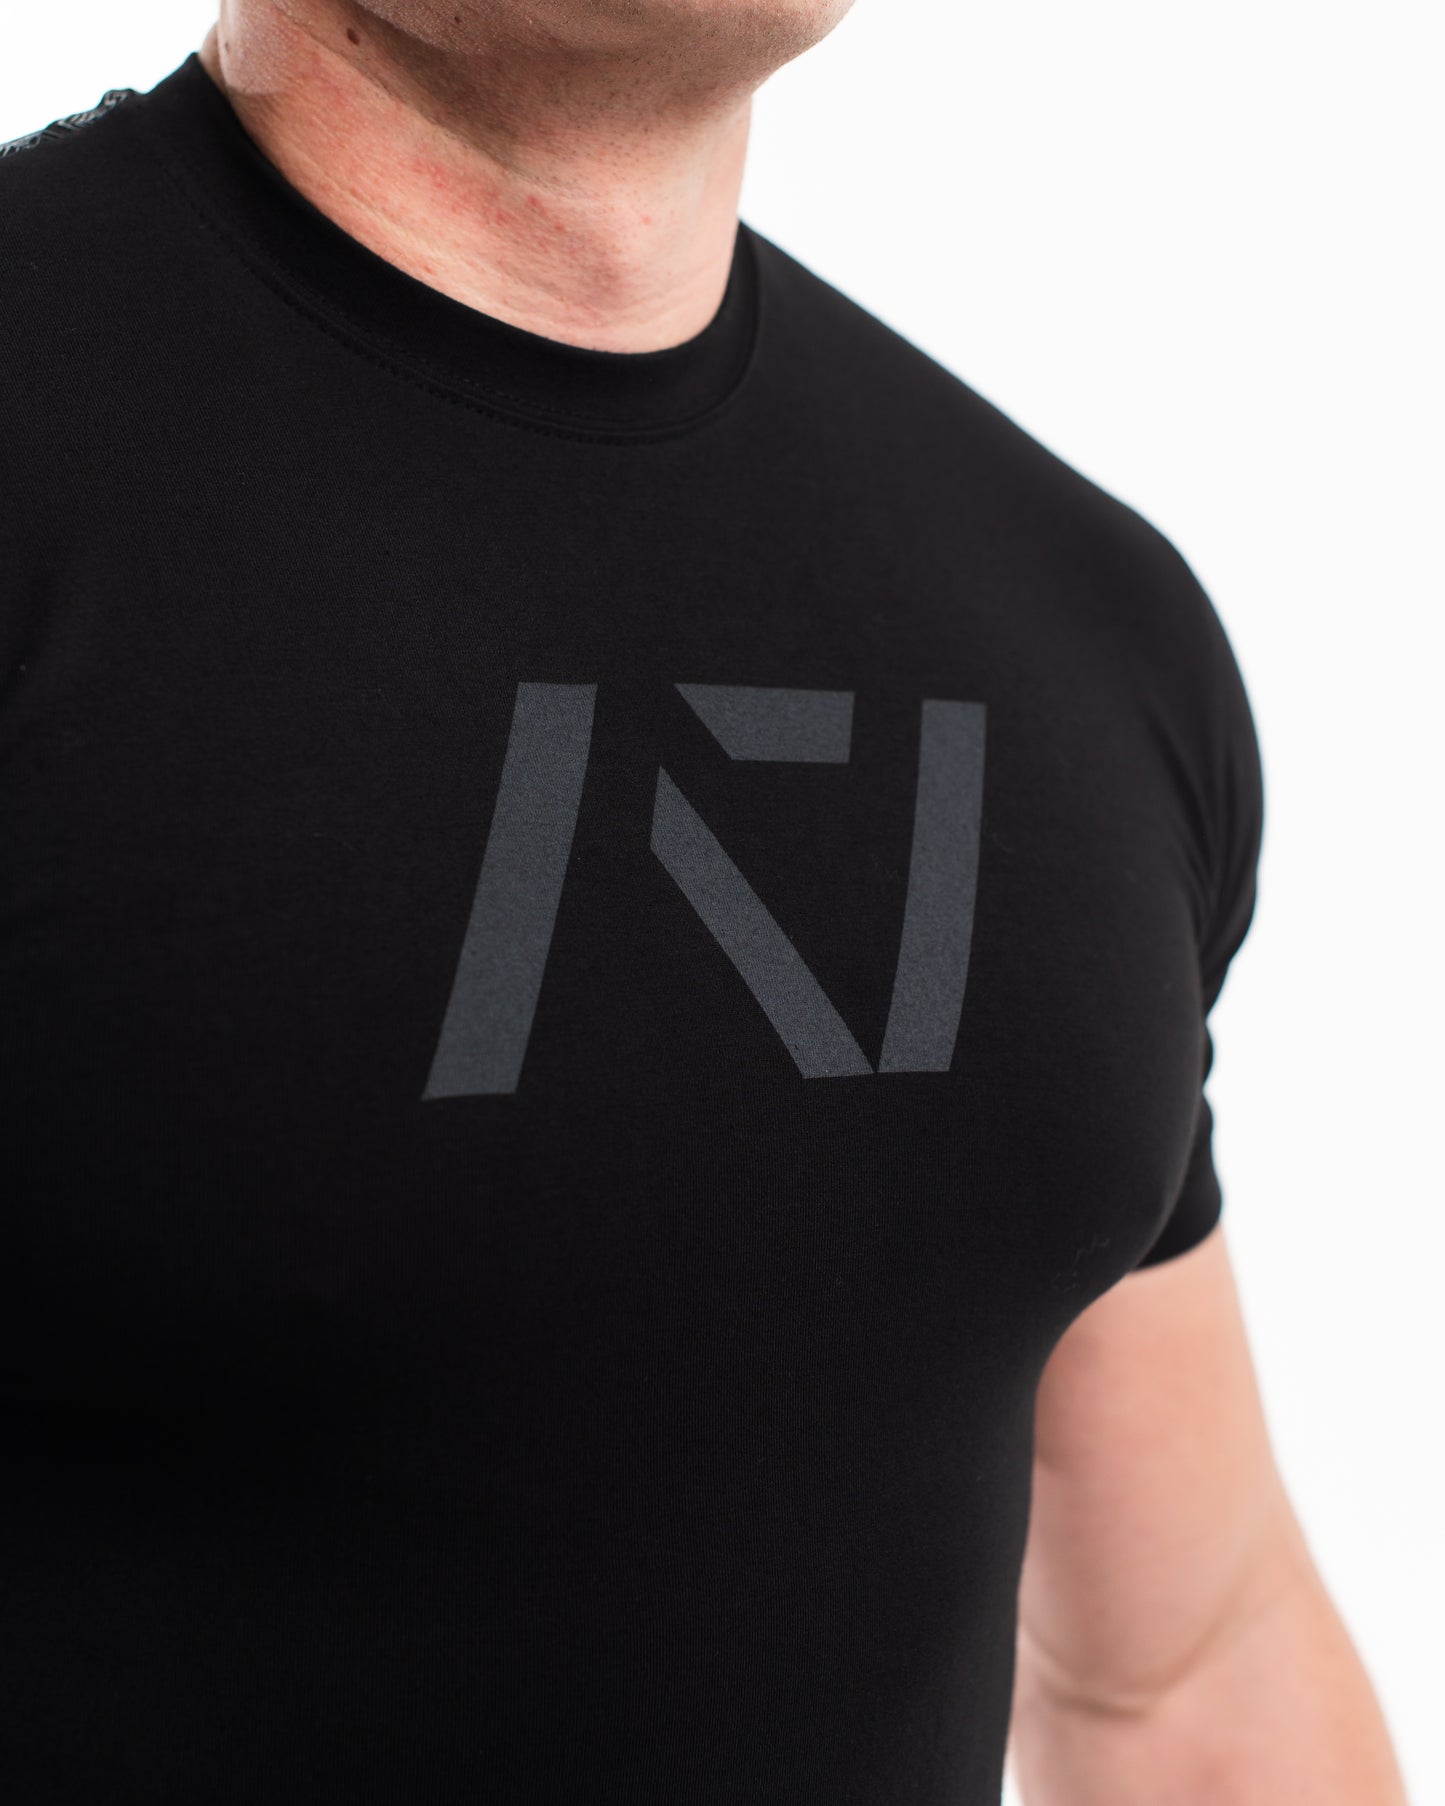 A7 Stealth Bar Grip Shirt - Black | Bench Press Shirt | A7